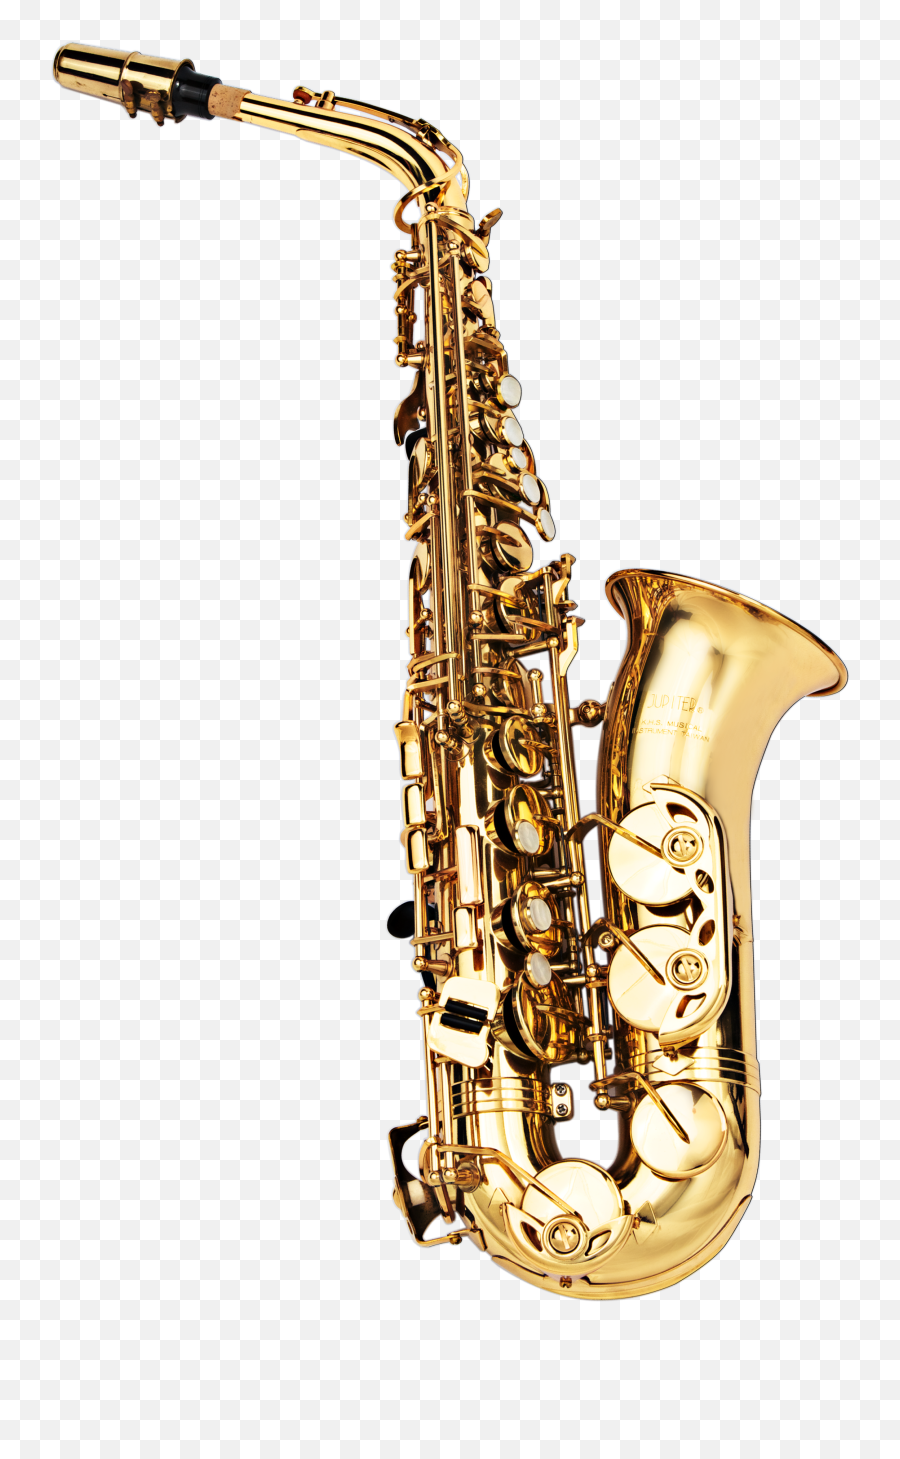 Saxophone Png Transparent Images - Saxophone Images Free Download,Trumpet Transparent